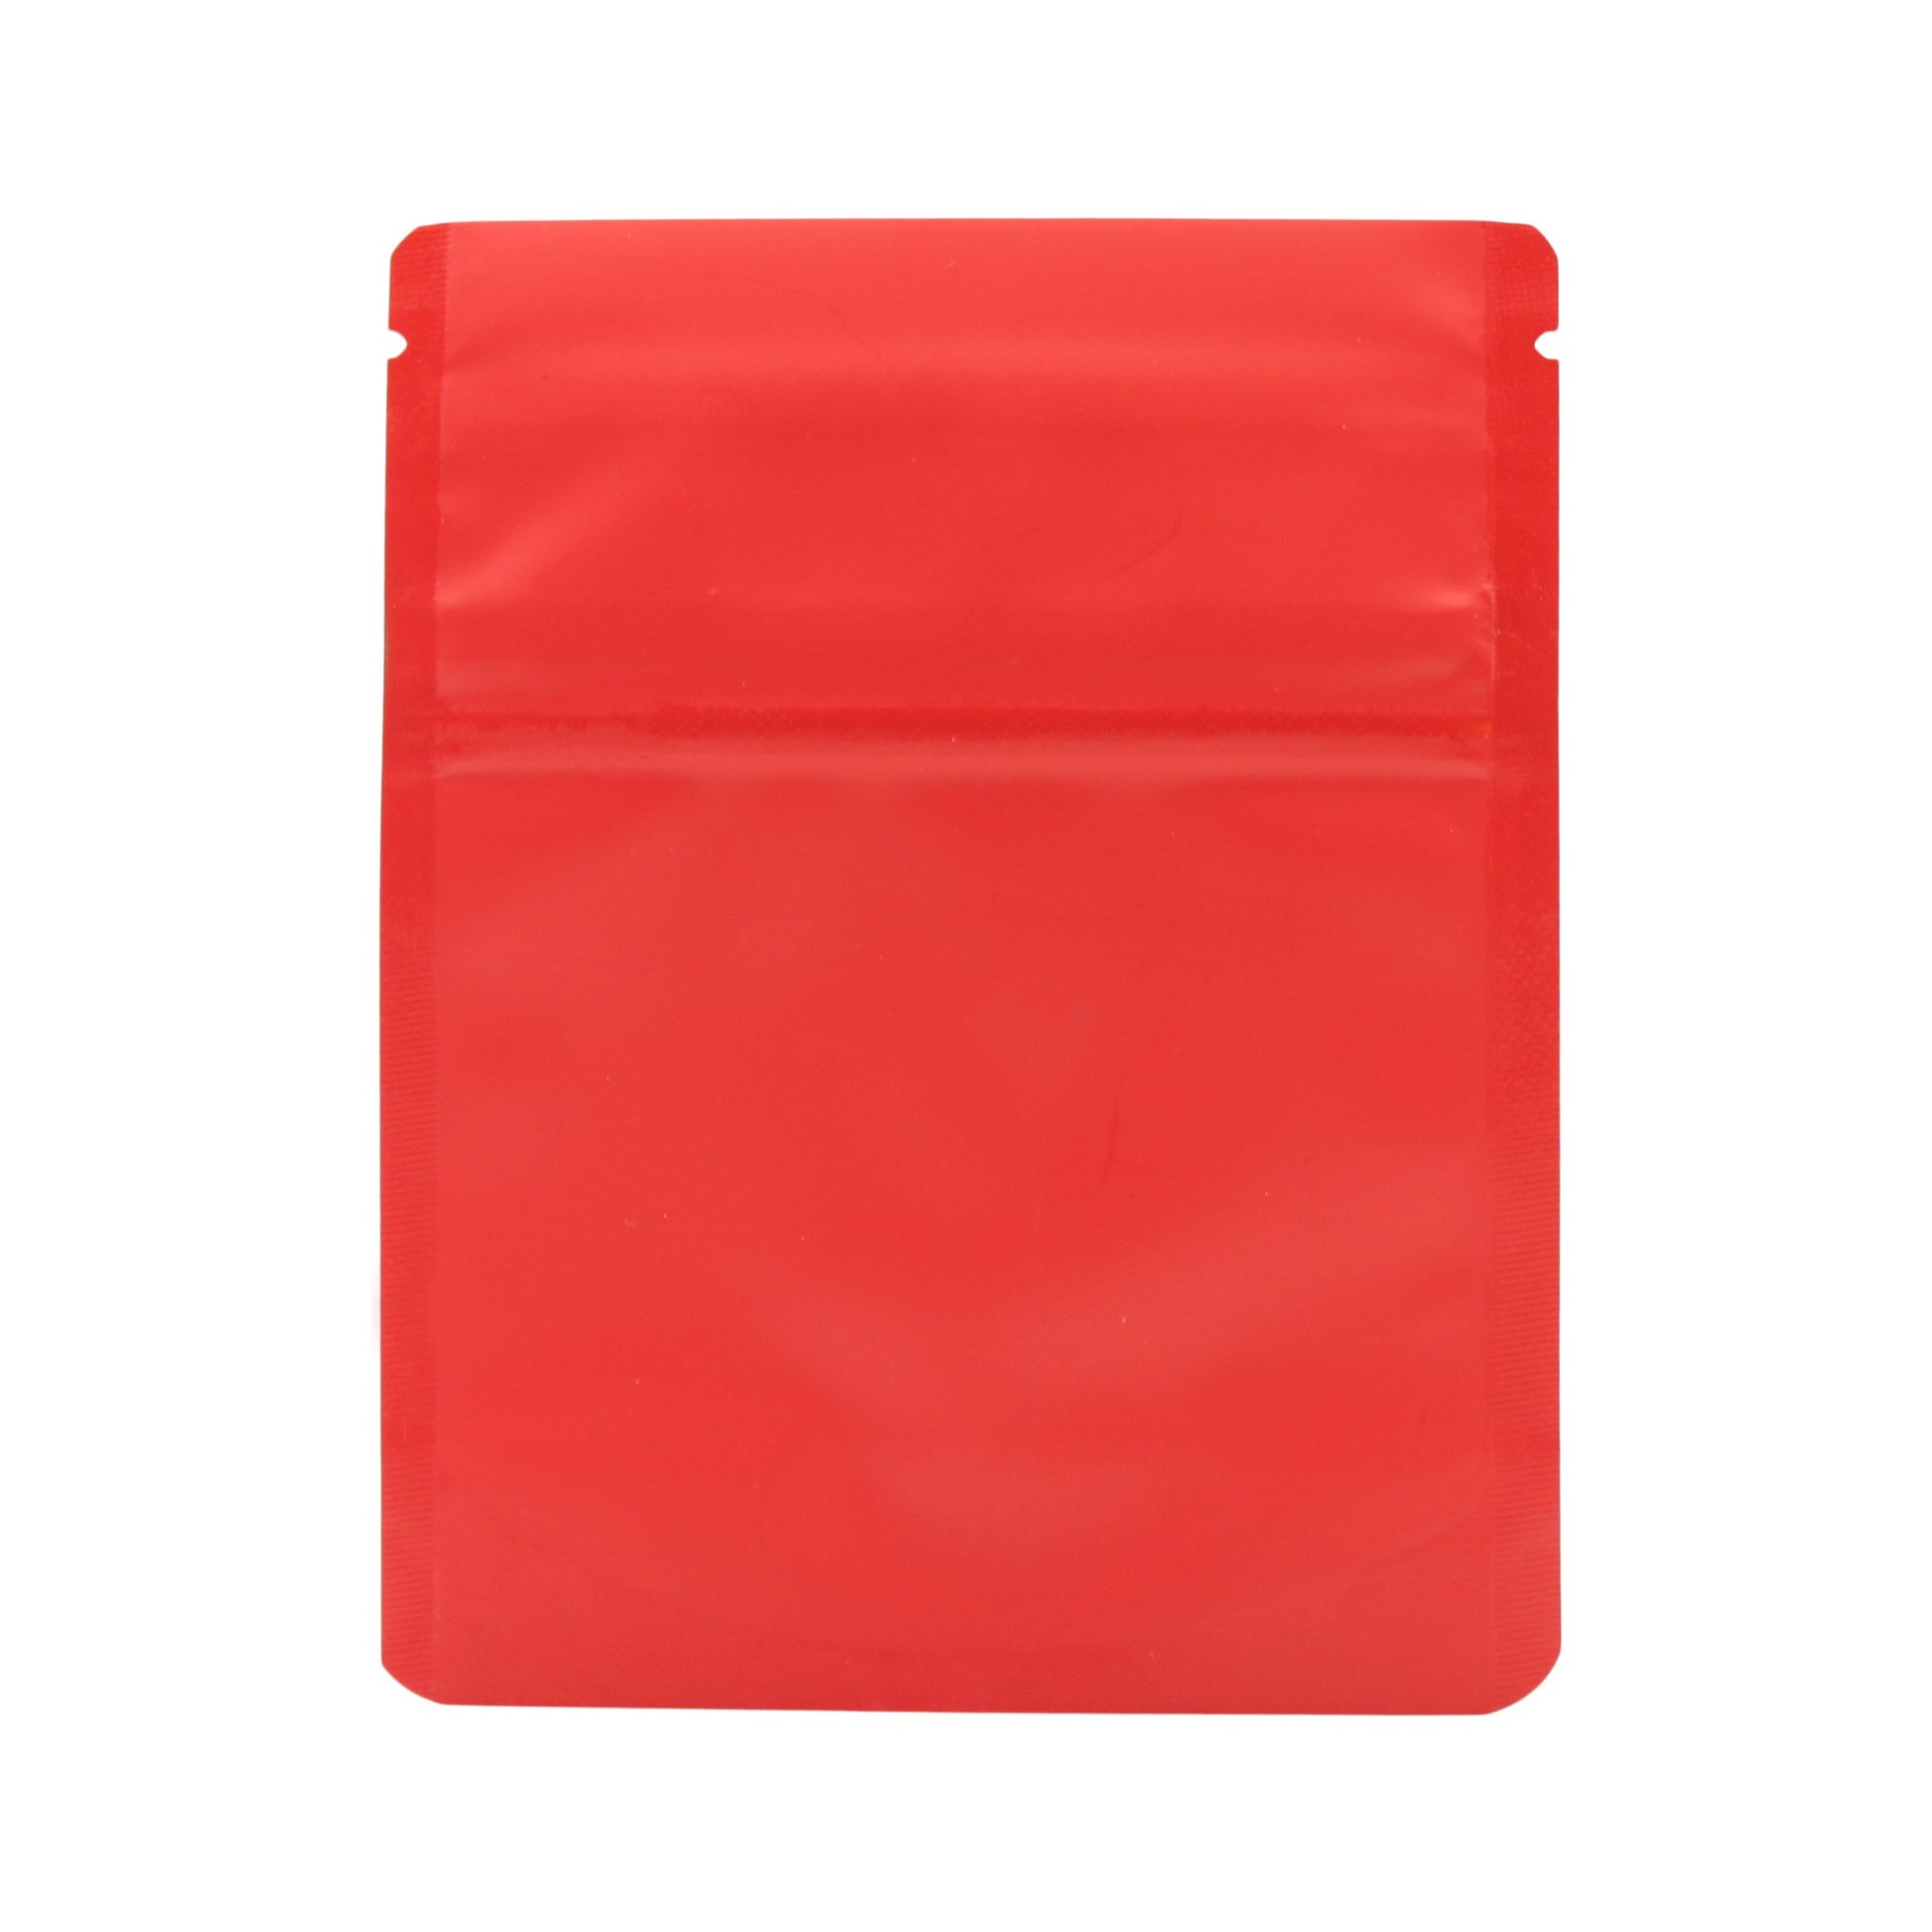 Bag King Child-Resistant Opaque Bag (1 gram) 3.5” x 4.5” Matte Red